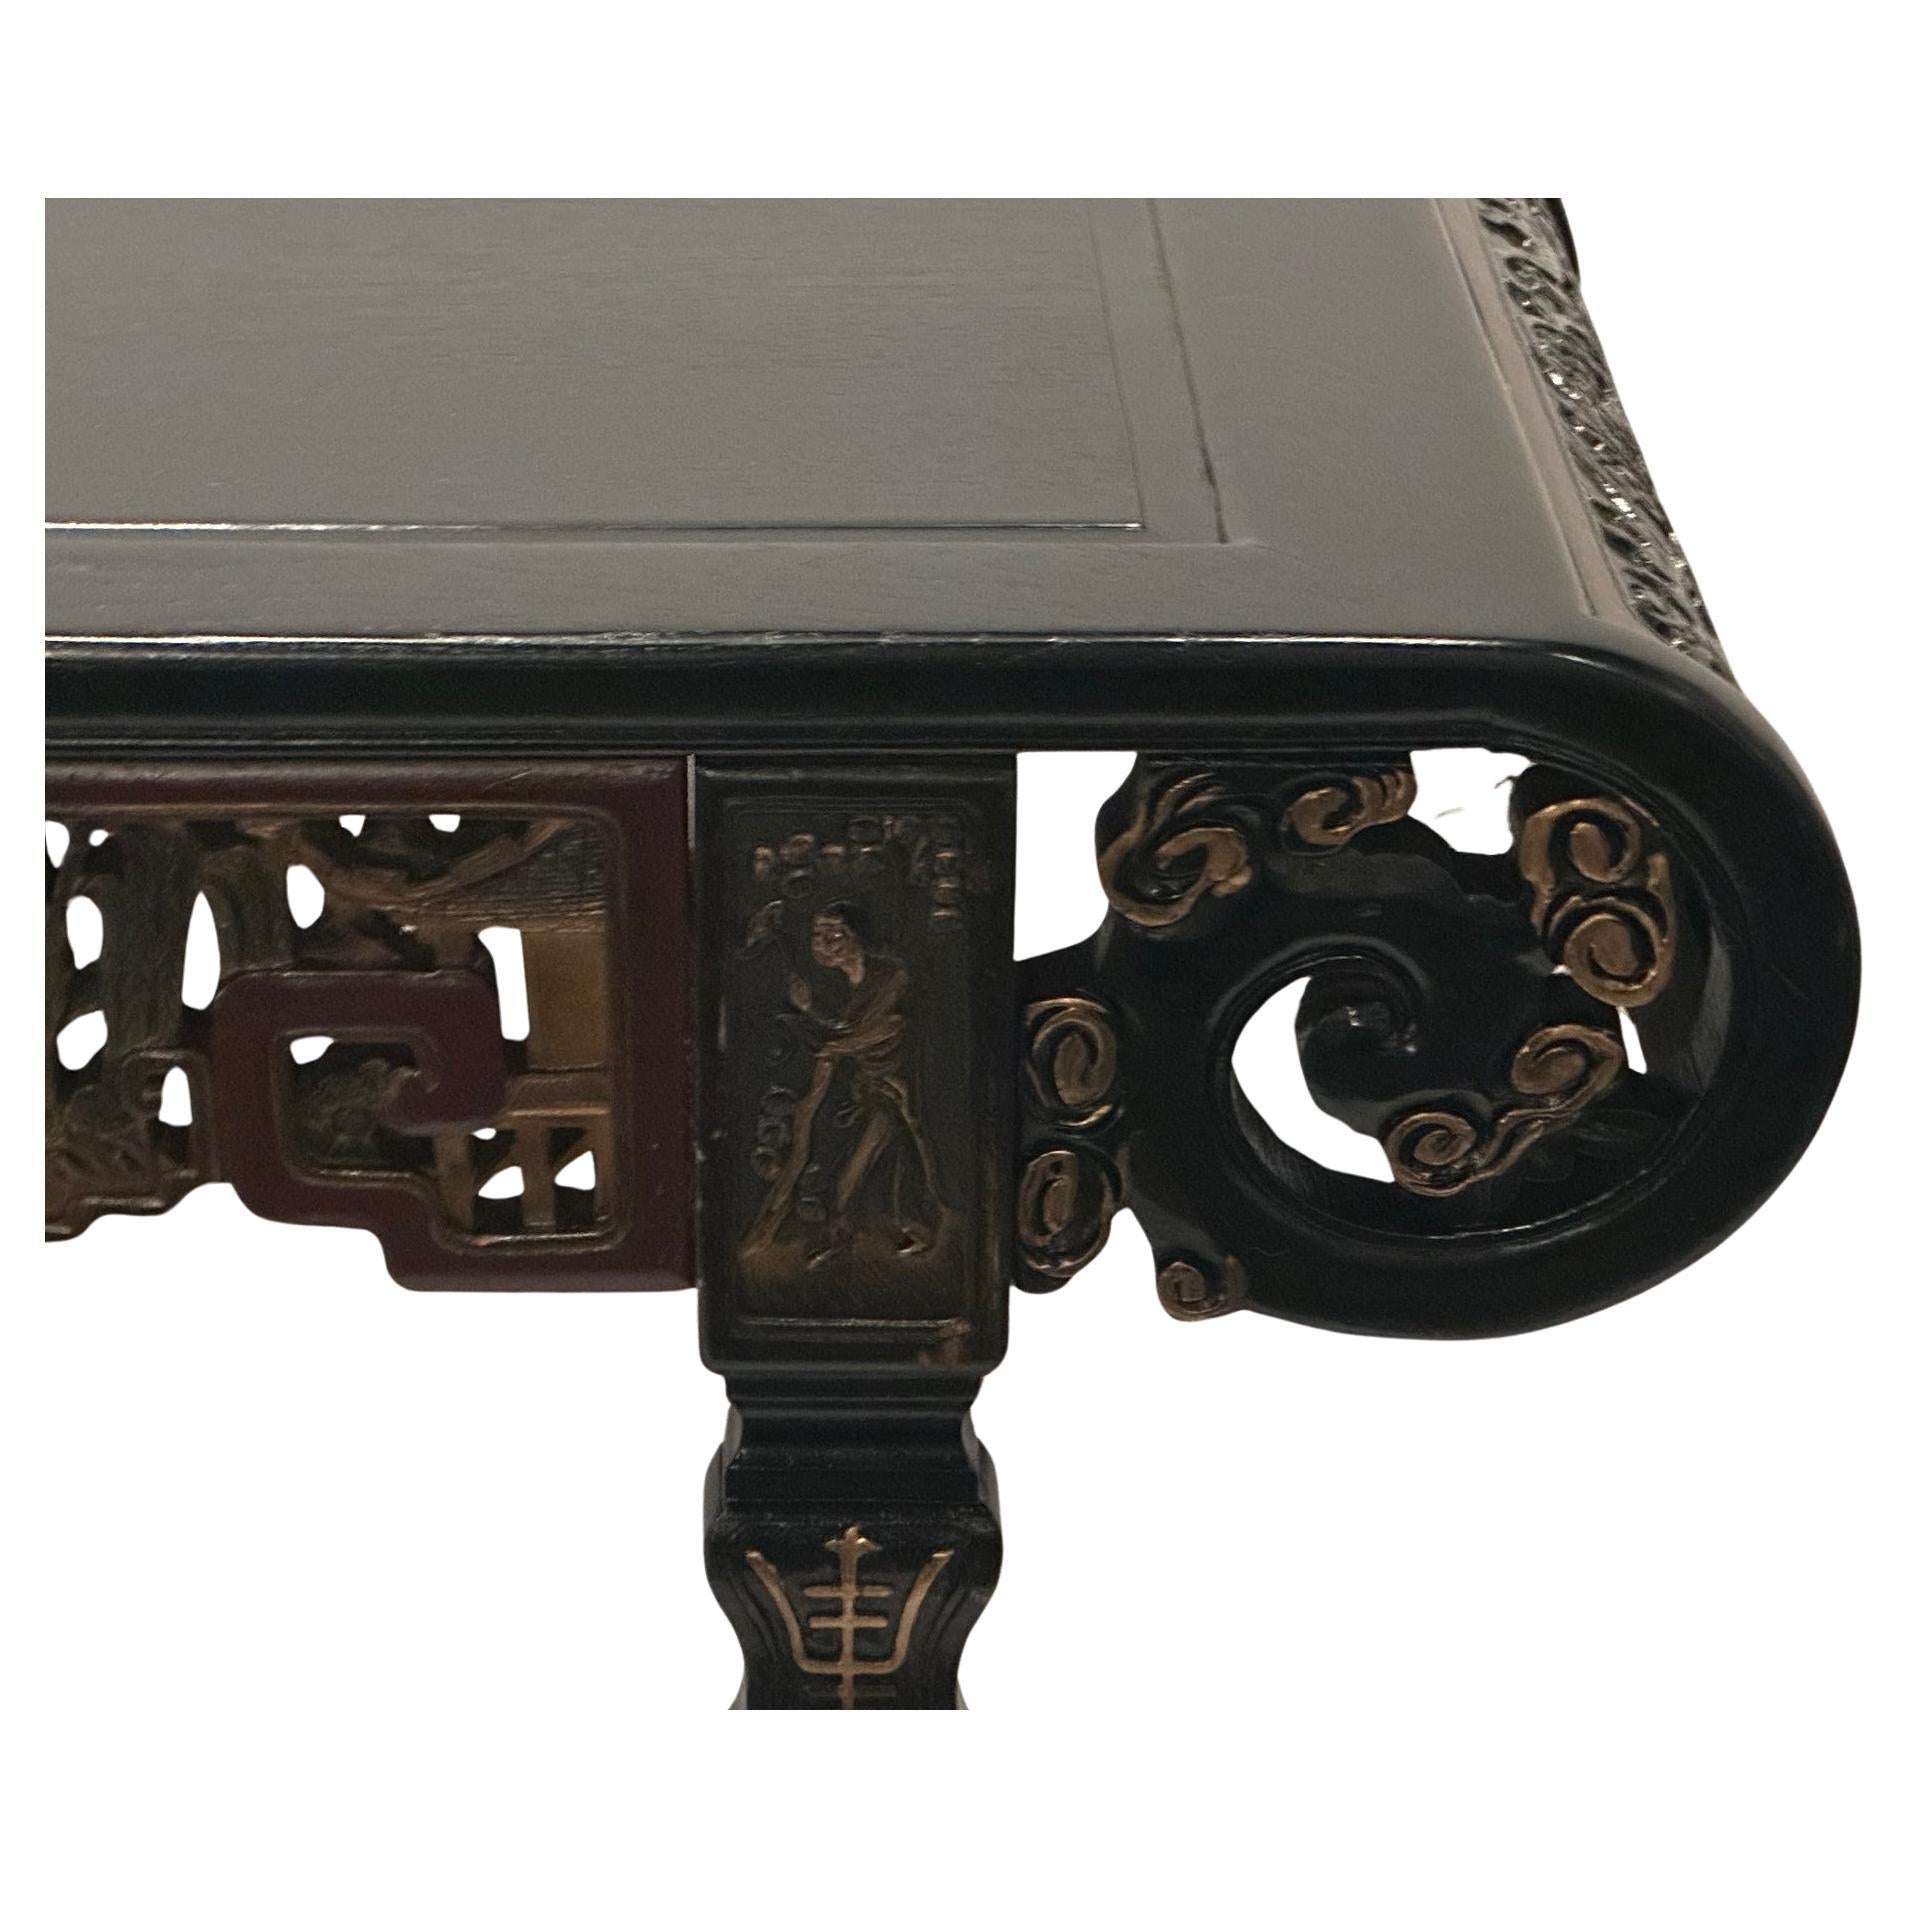 Gorgeous ornately carved antique ebonized center table having glistening burgundy and gold highlights.